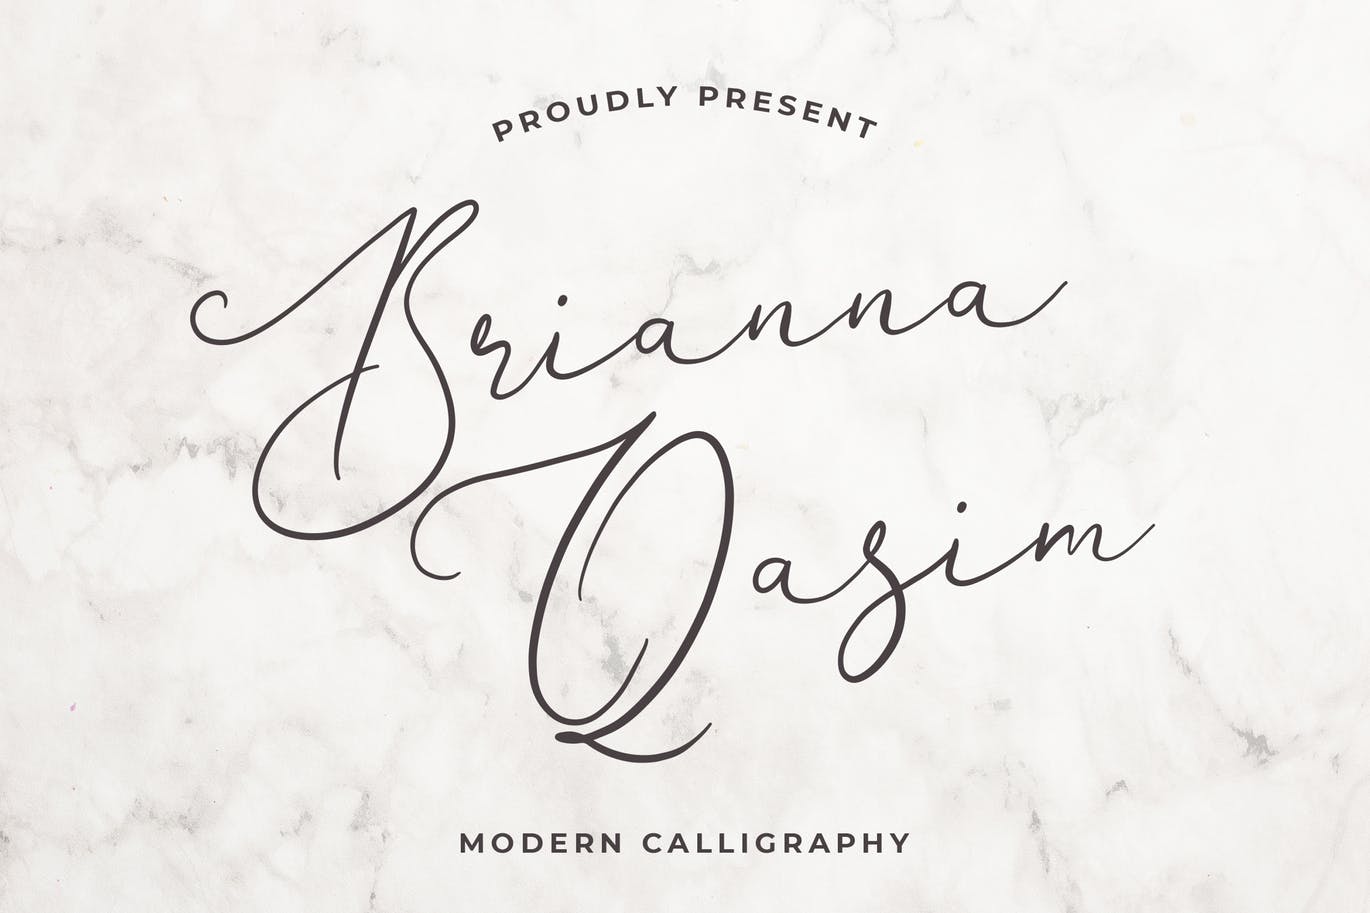 独特手写连笔书法英文字体素材库精选 Brianna Qasim Beautiful Calligraphy Font插图